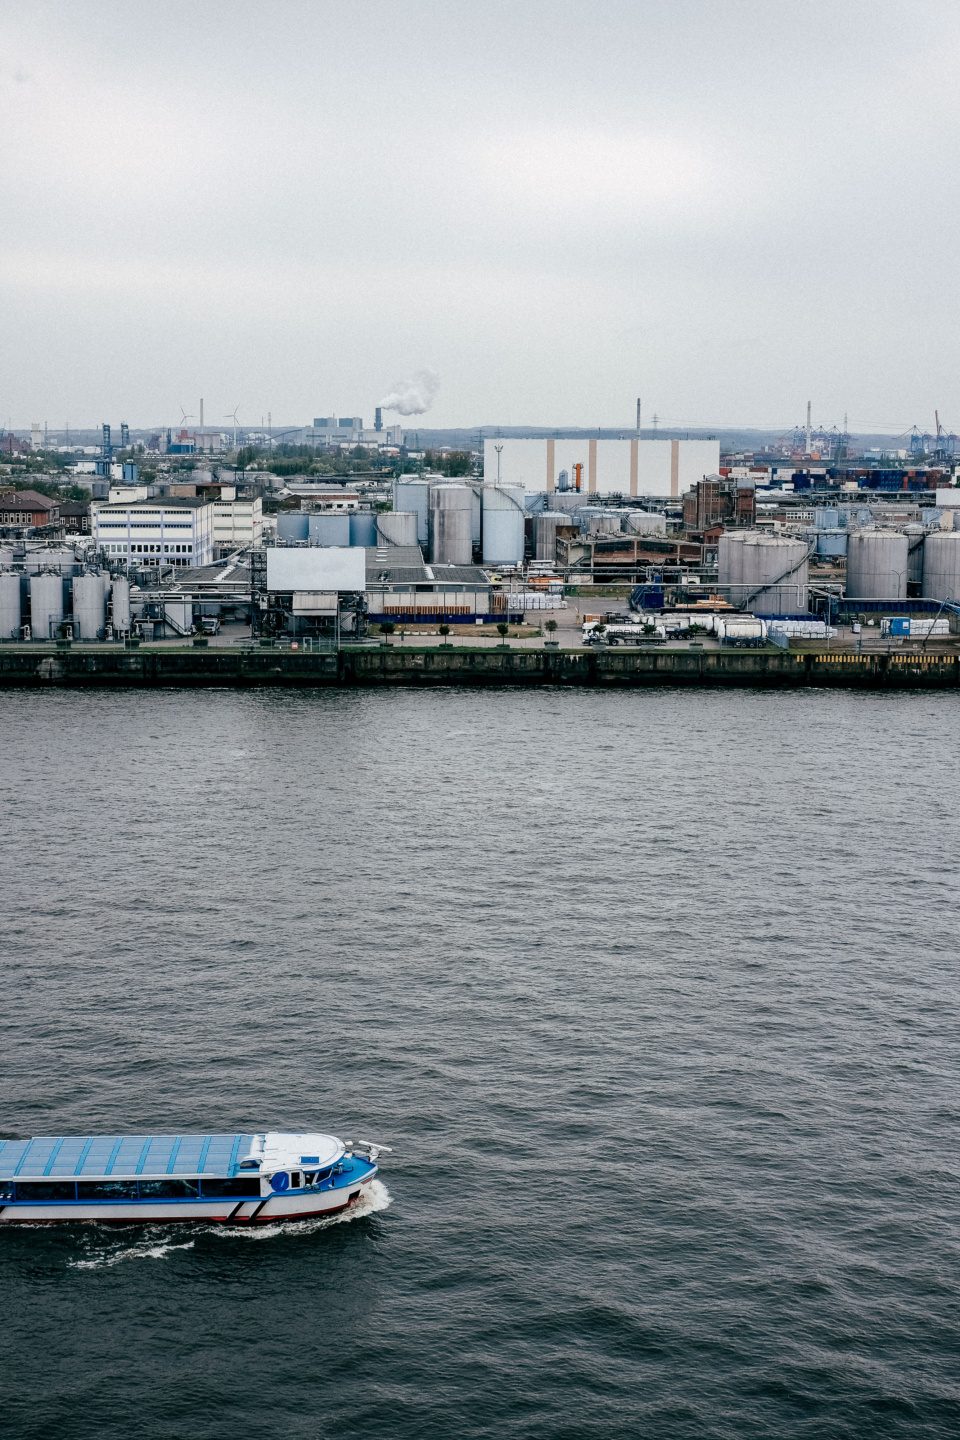 Boat at Hamburg Industrial Harbour